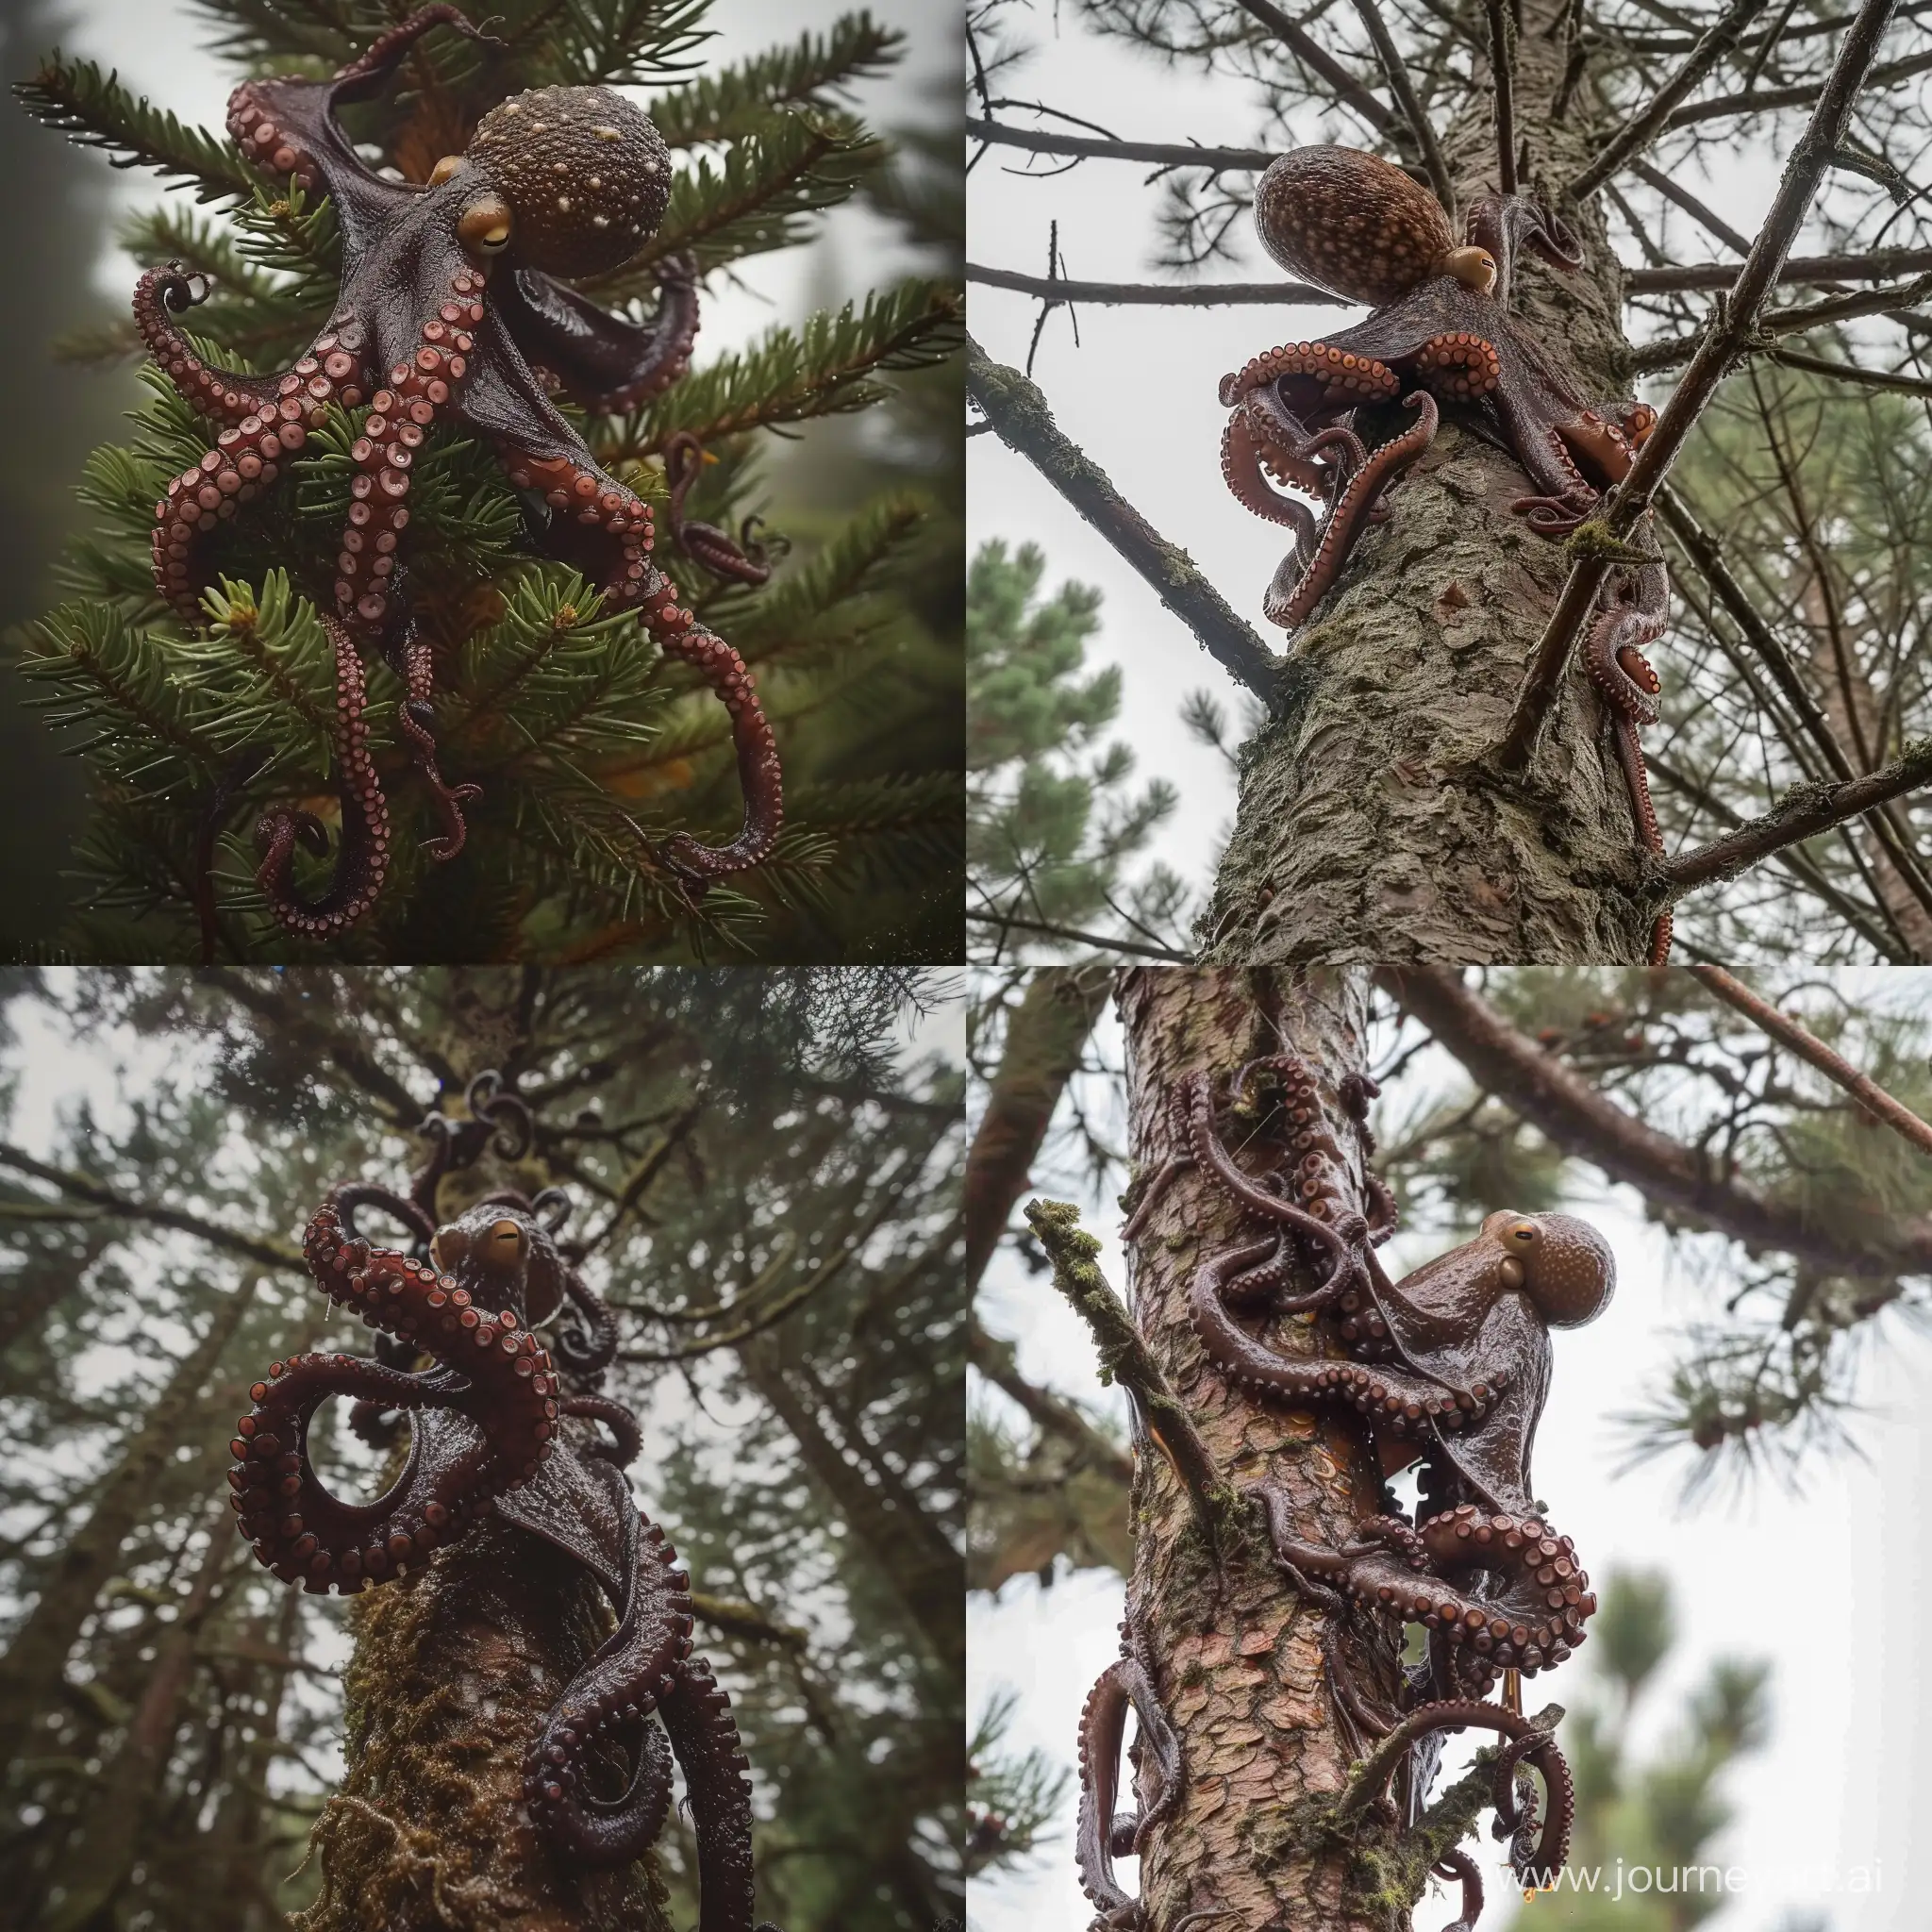 Mottled-Dark-Brown-Octopus-Climbing-Pine-Tree-in-Temperate-Rainforest